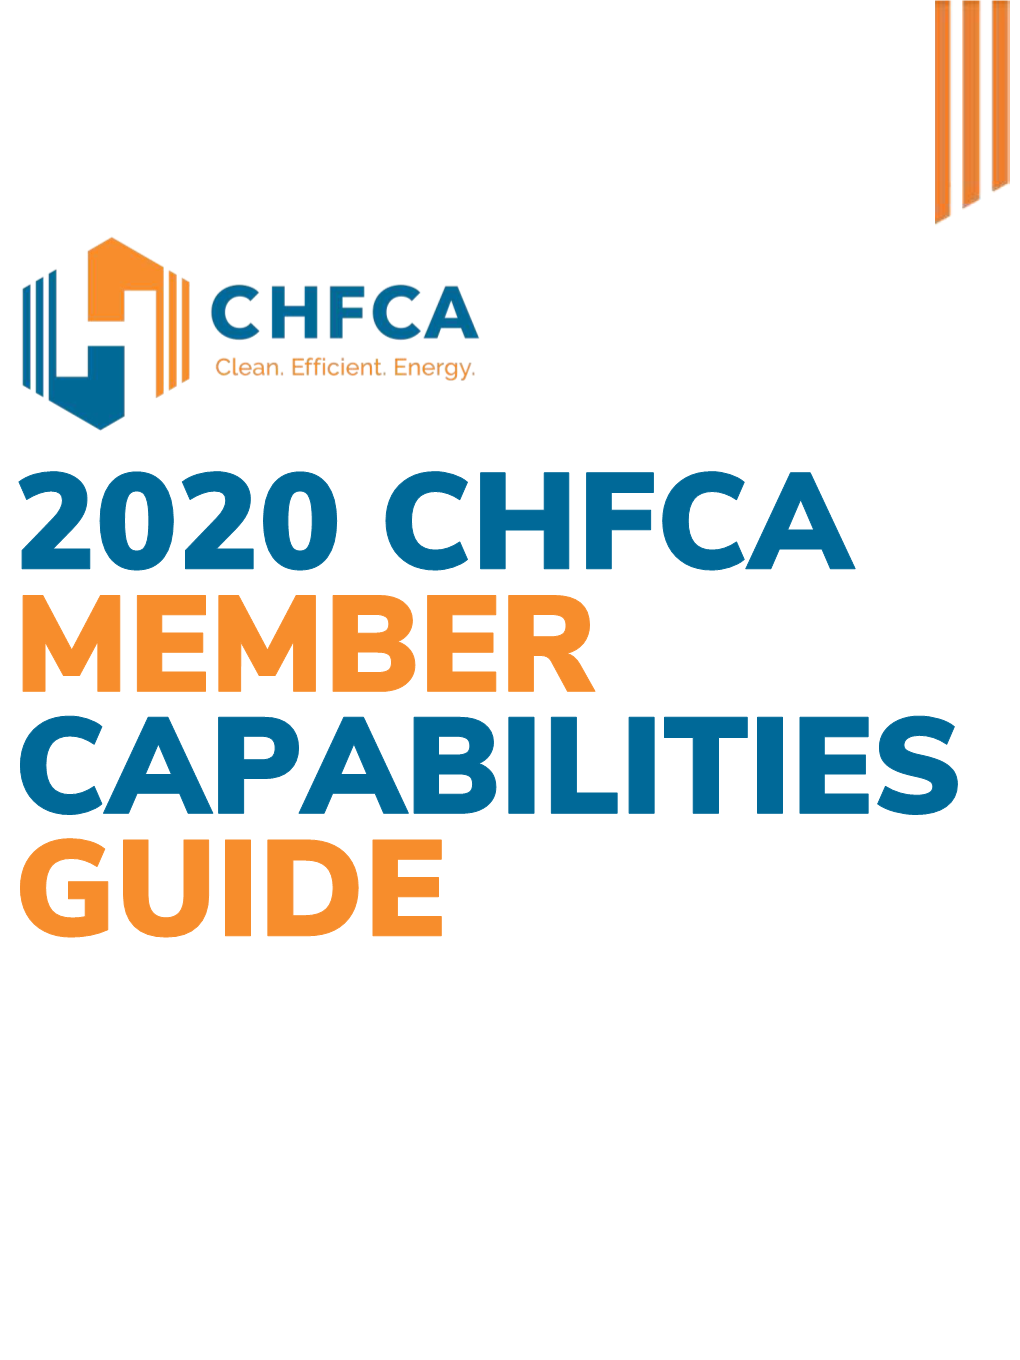 CHFCA Capabilities Guide 2020